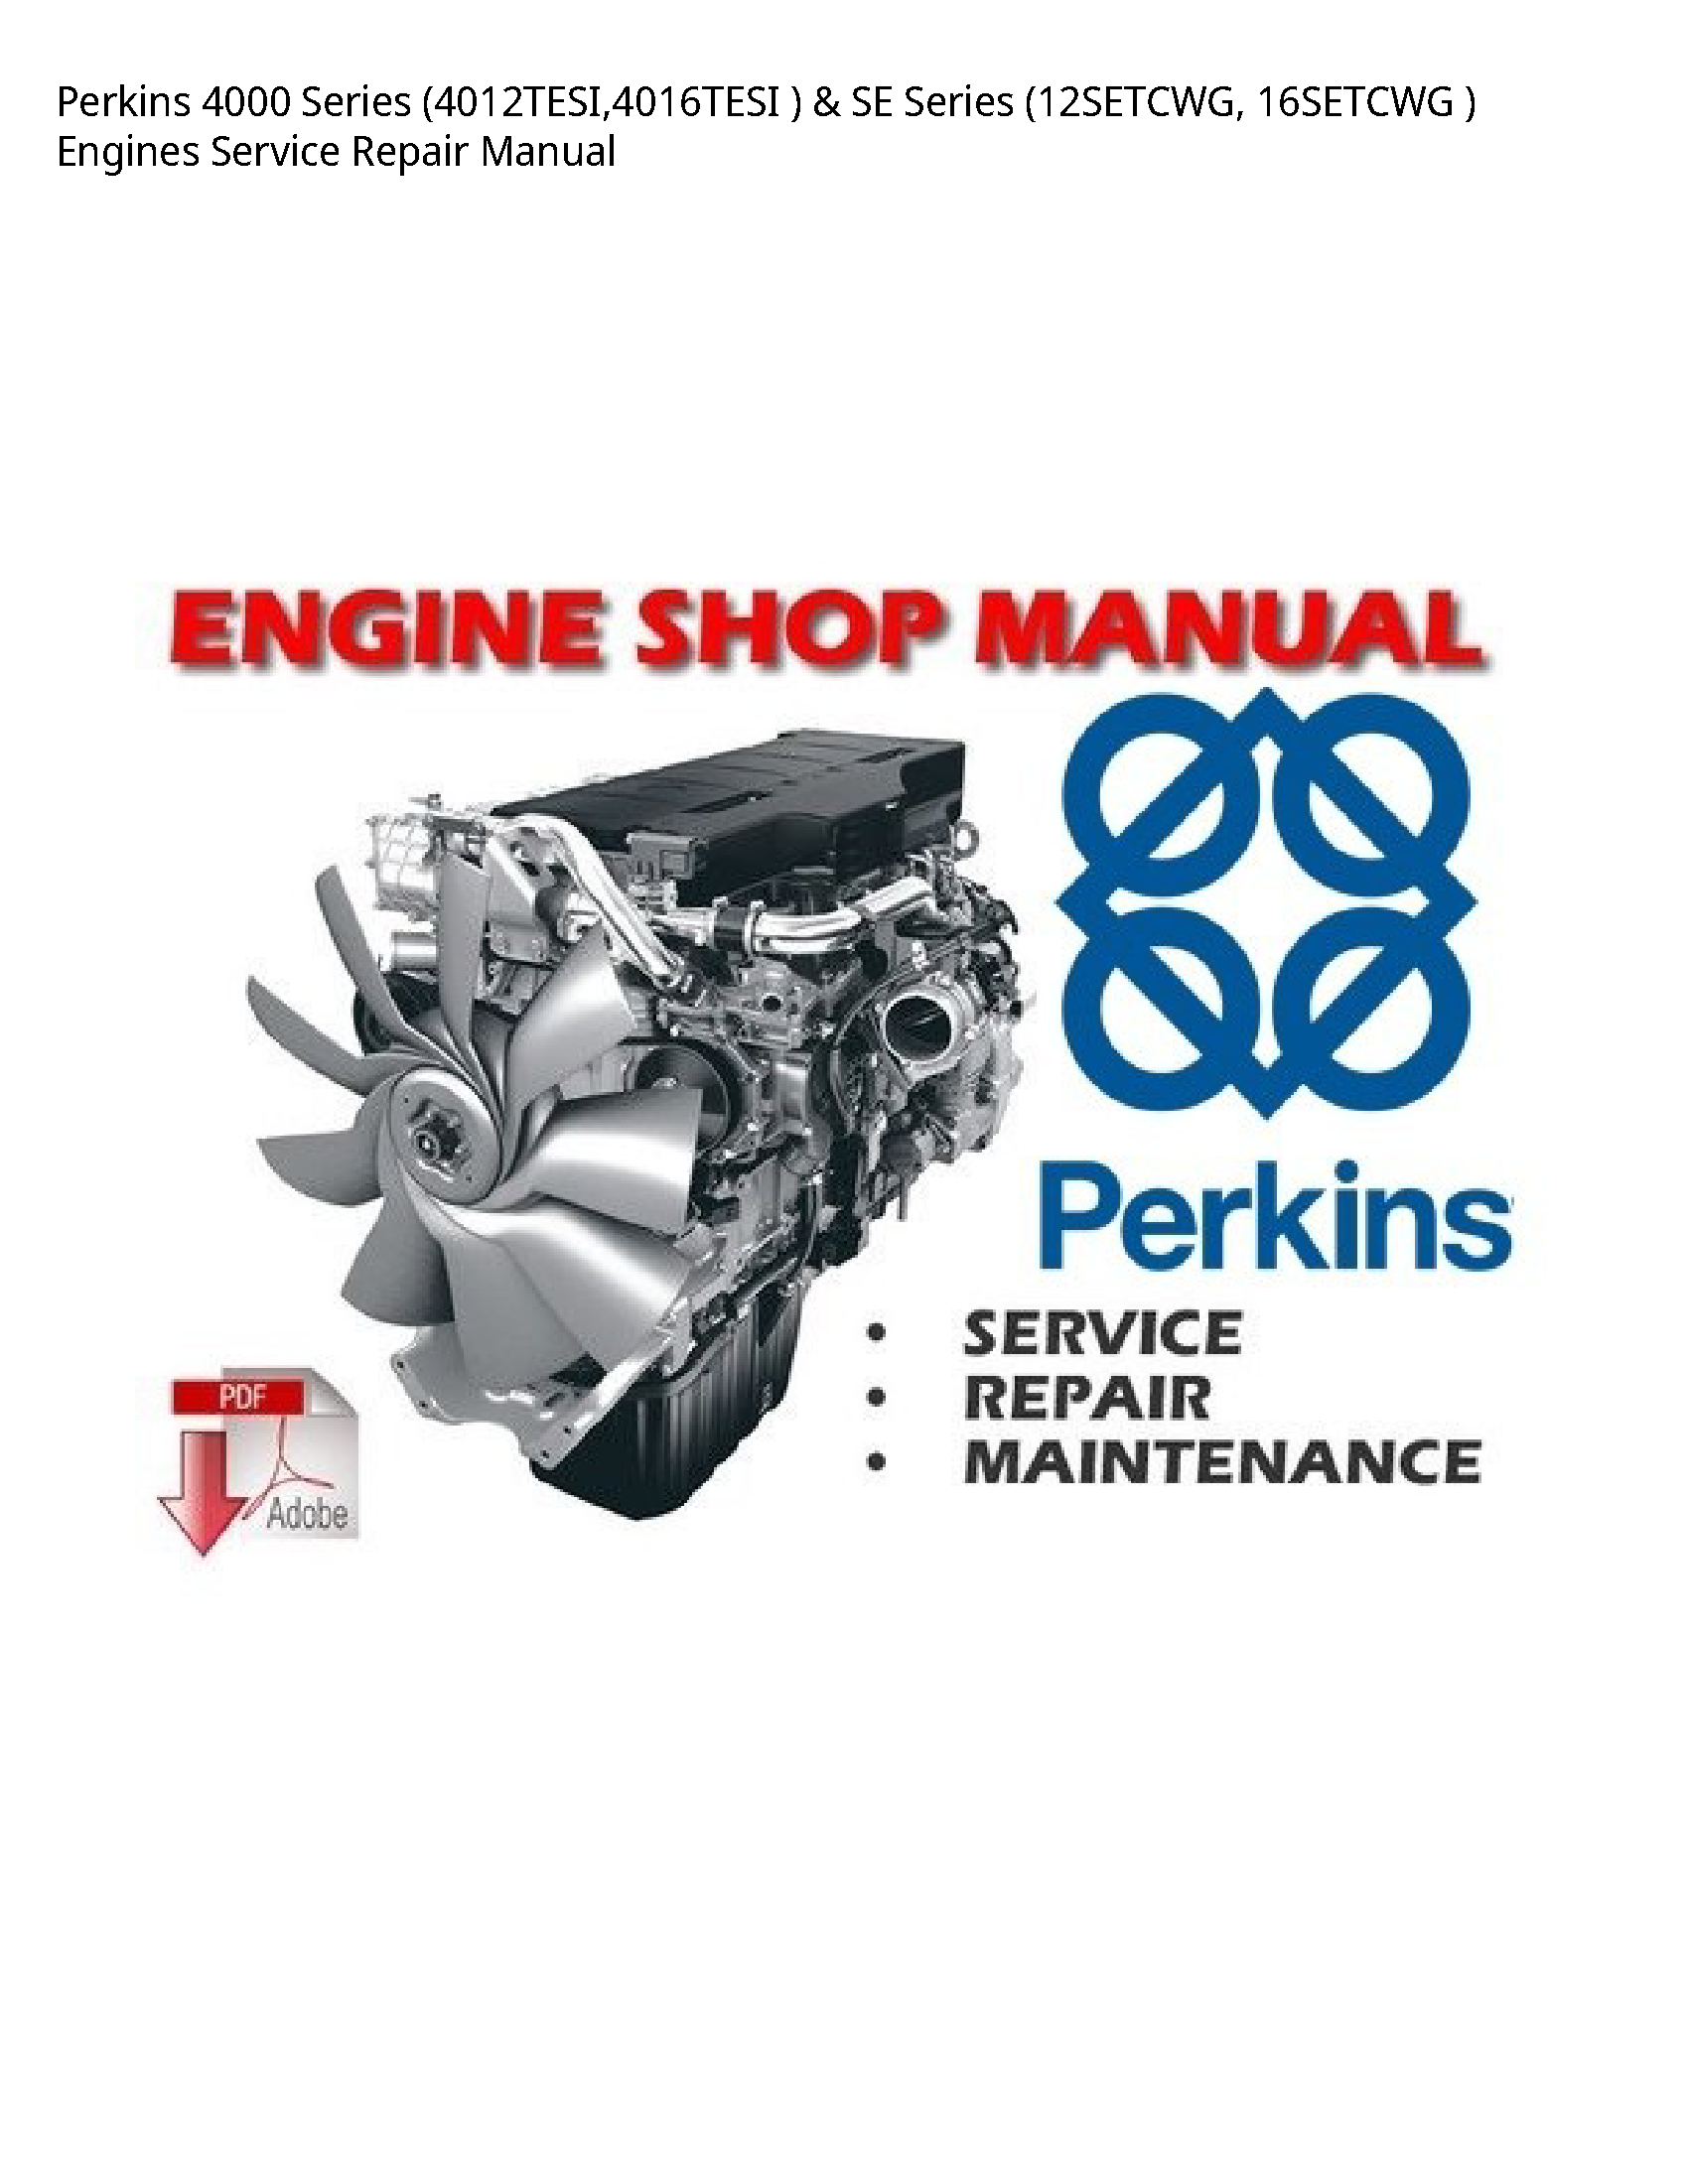 Perkins 4000 Series SE Series Engines manual